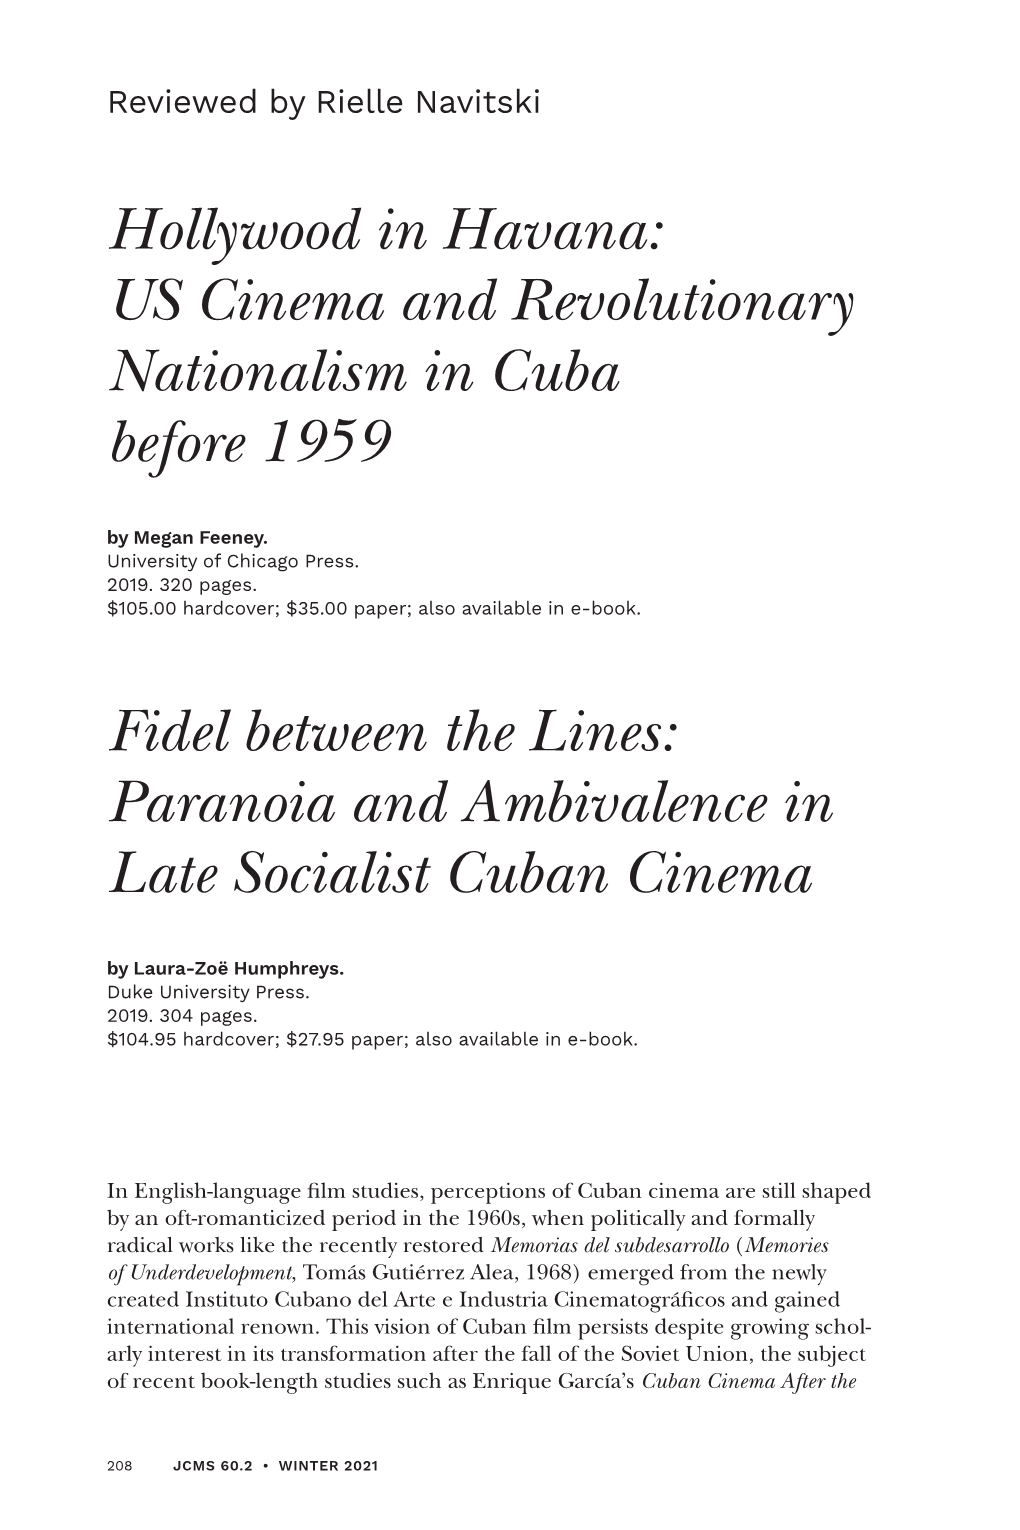 Hollywood in Havana: US Cinema and Revolutionary Nationalism in Cuba Before 1959 by Megan Feeney